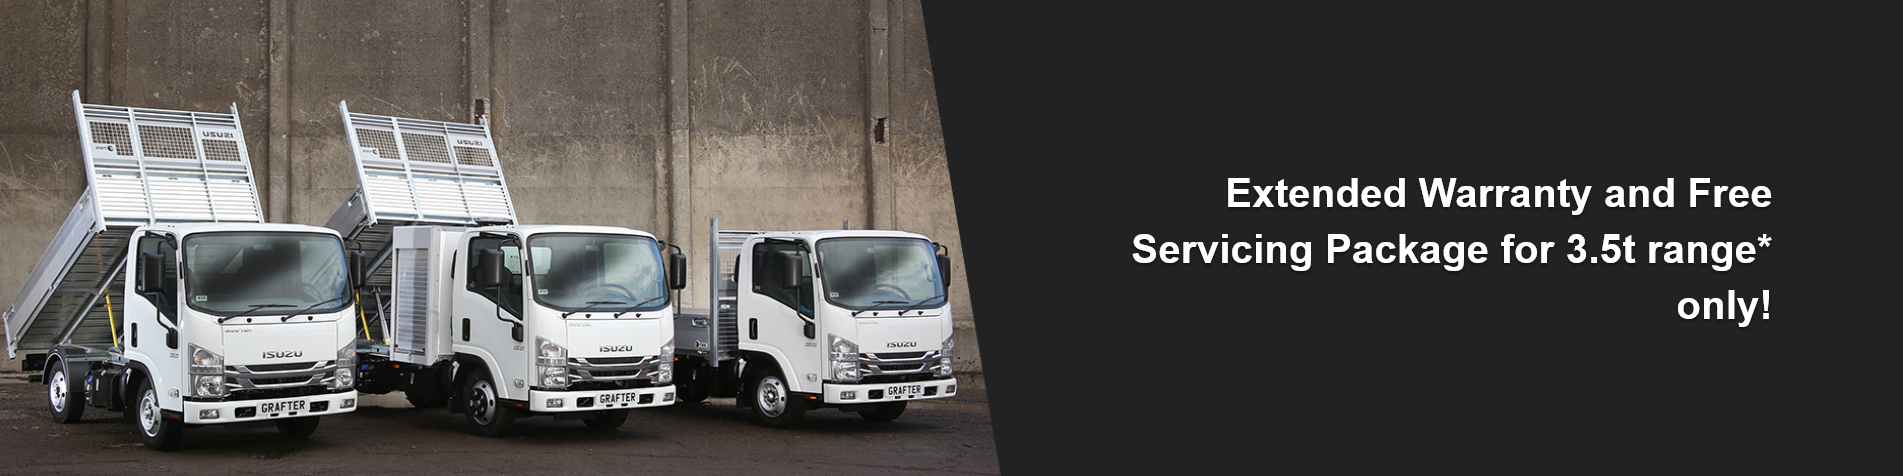 Isuzu Trucks Service